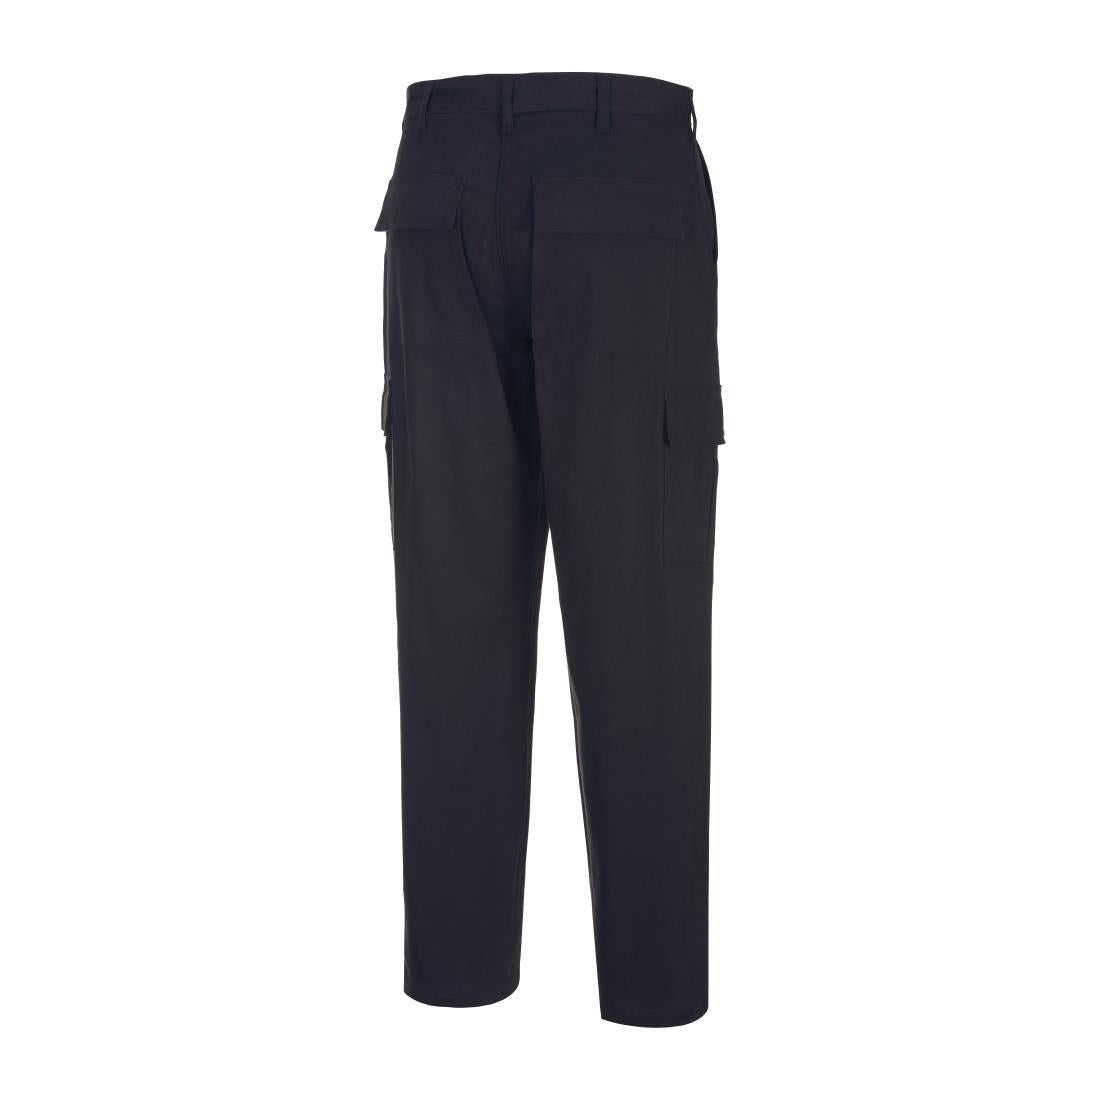 BA088-10 Portwest Eco Women's Stretch Cargo Trousers Black Size 10